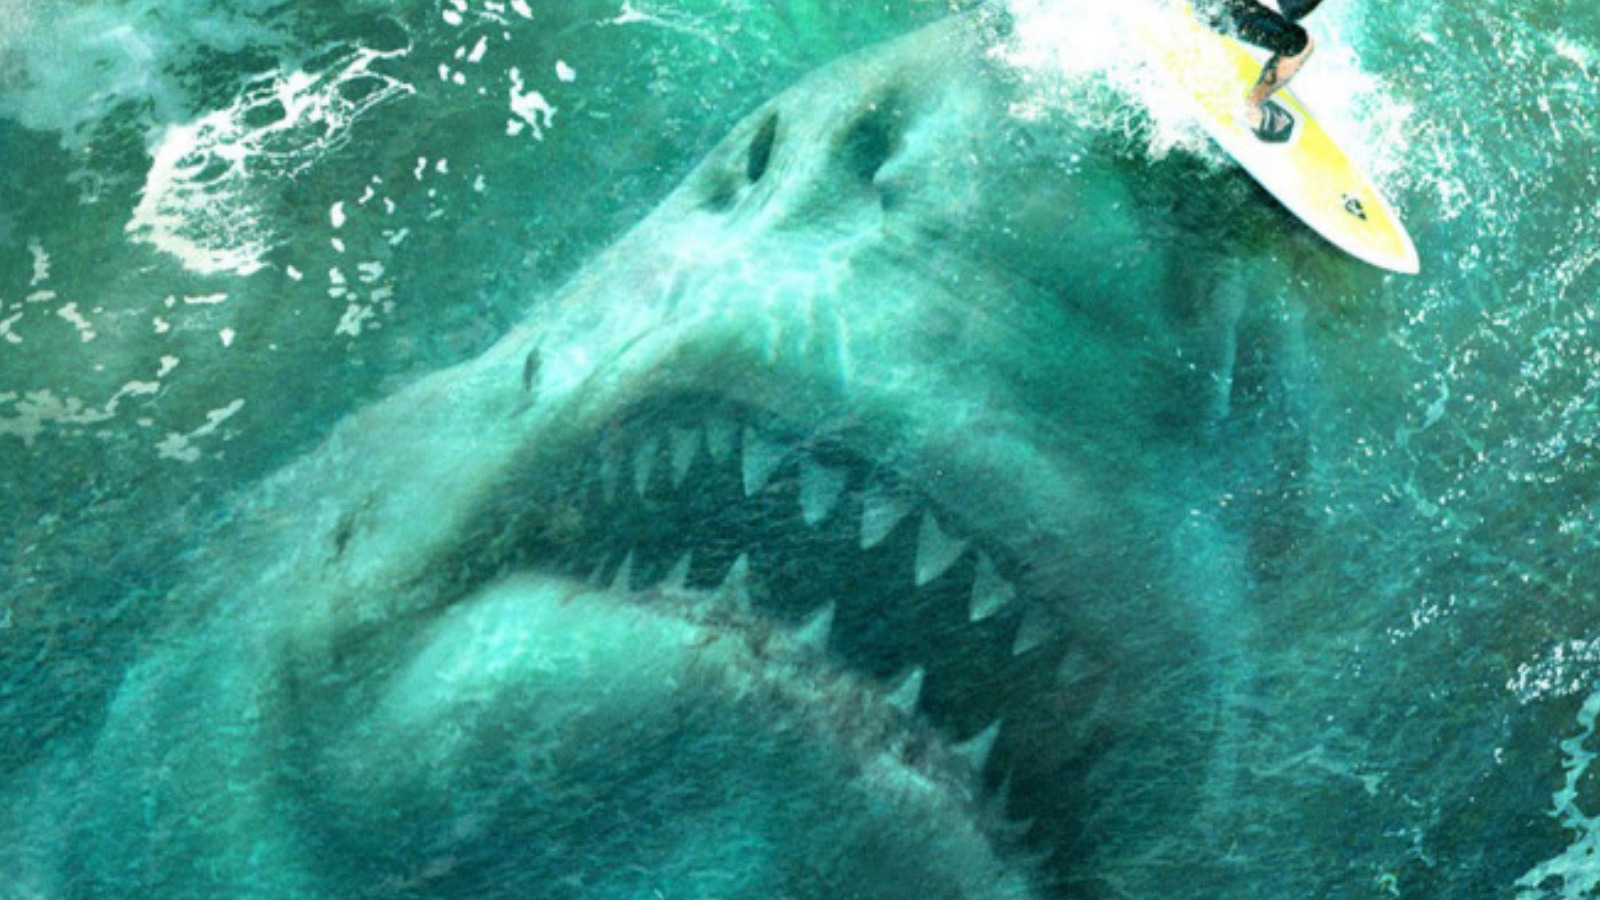 Movie shark